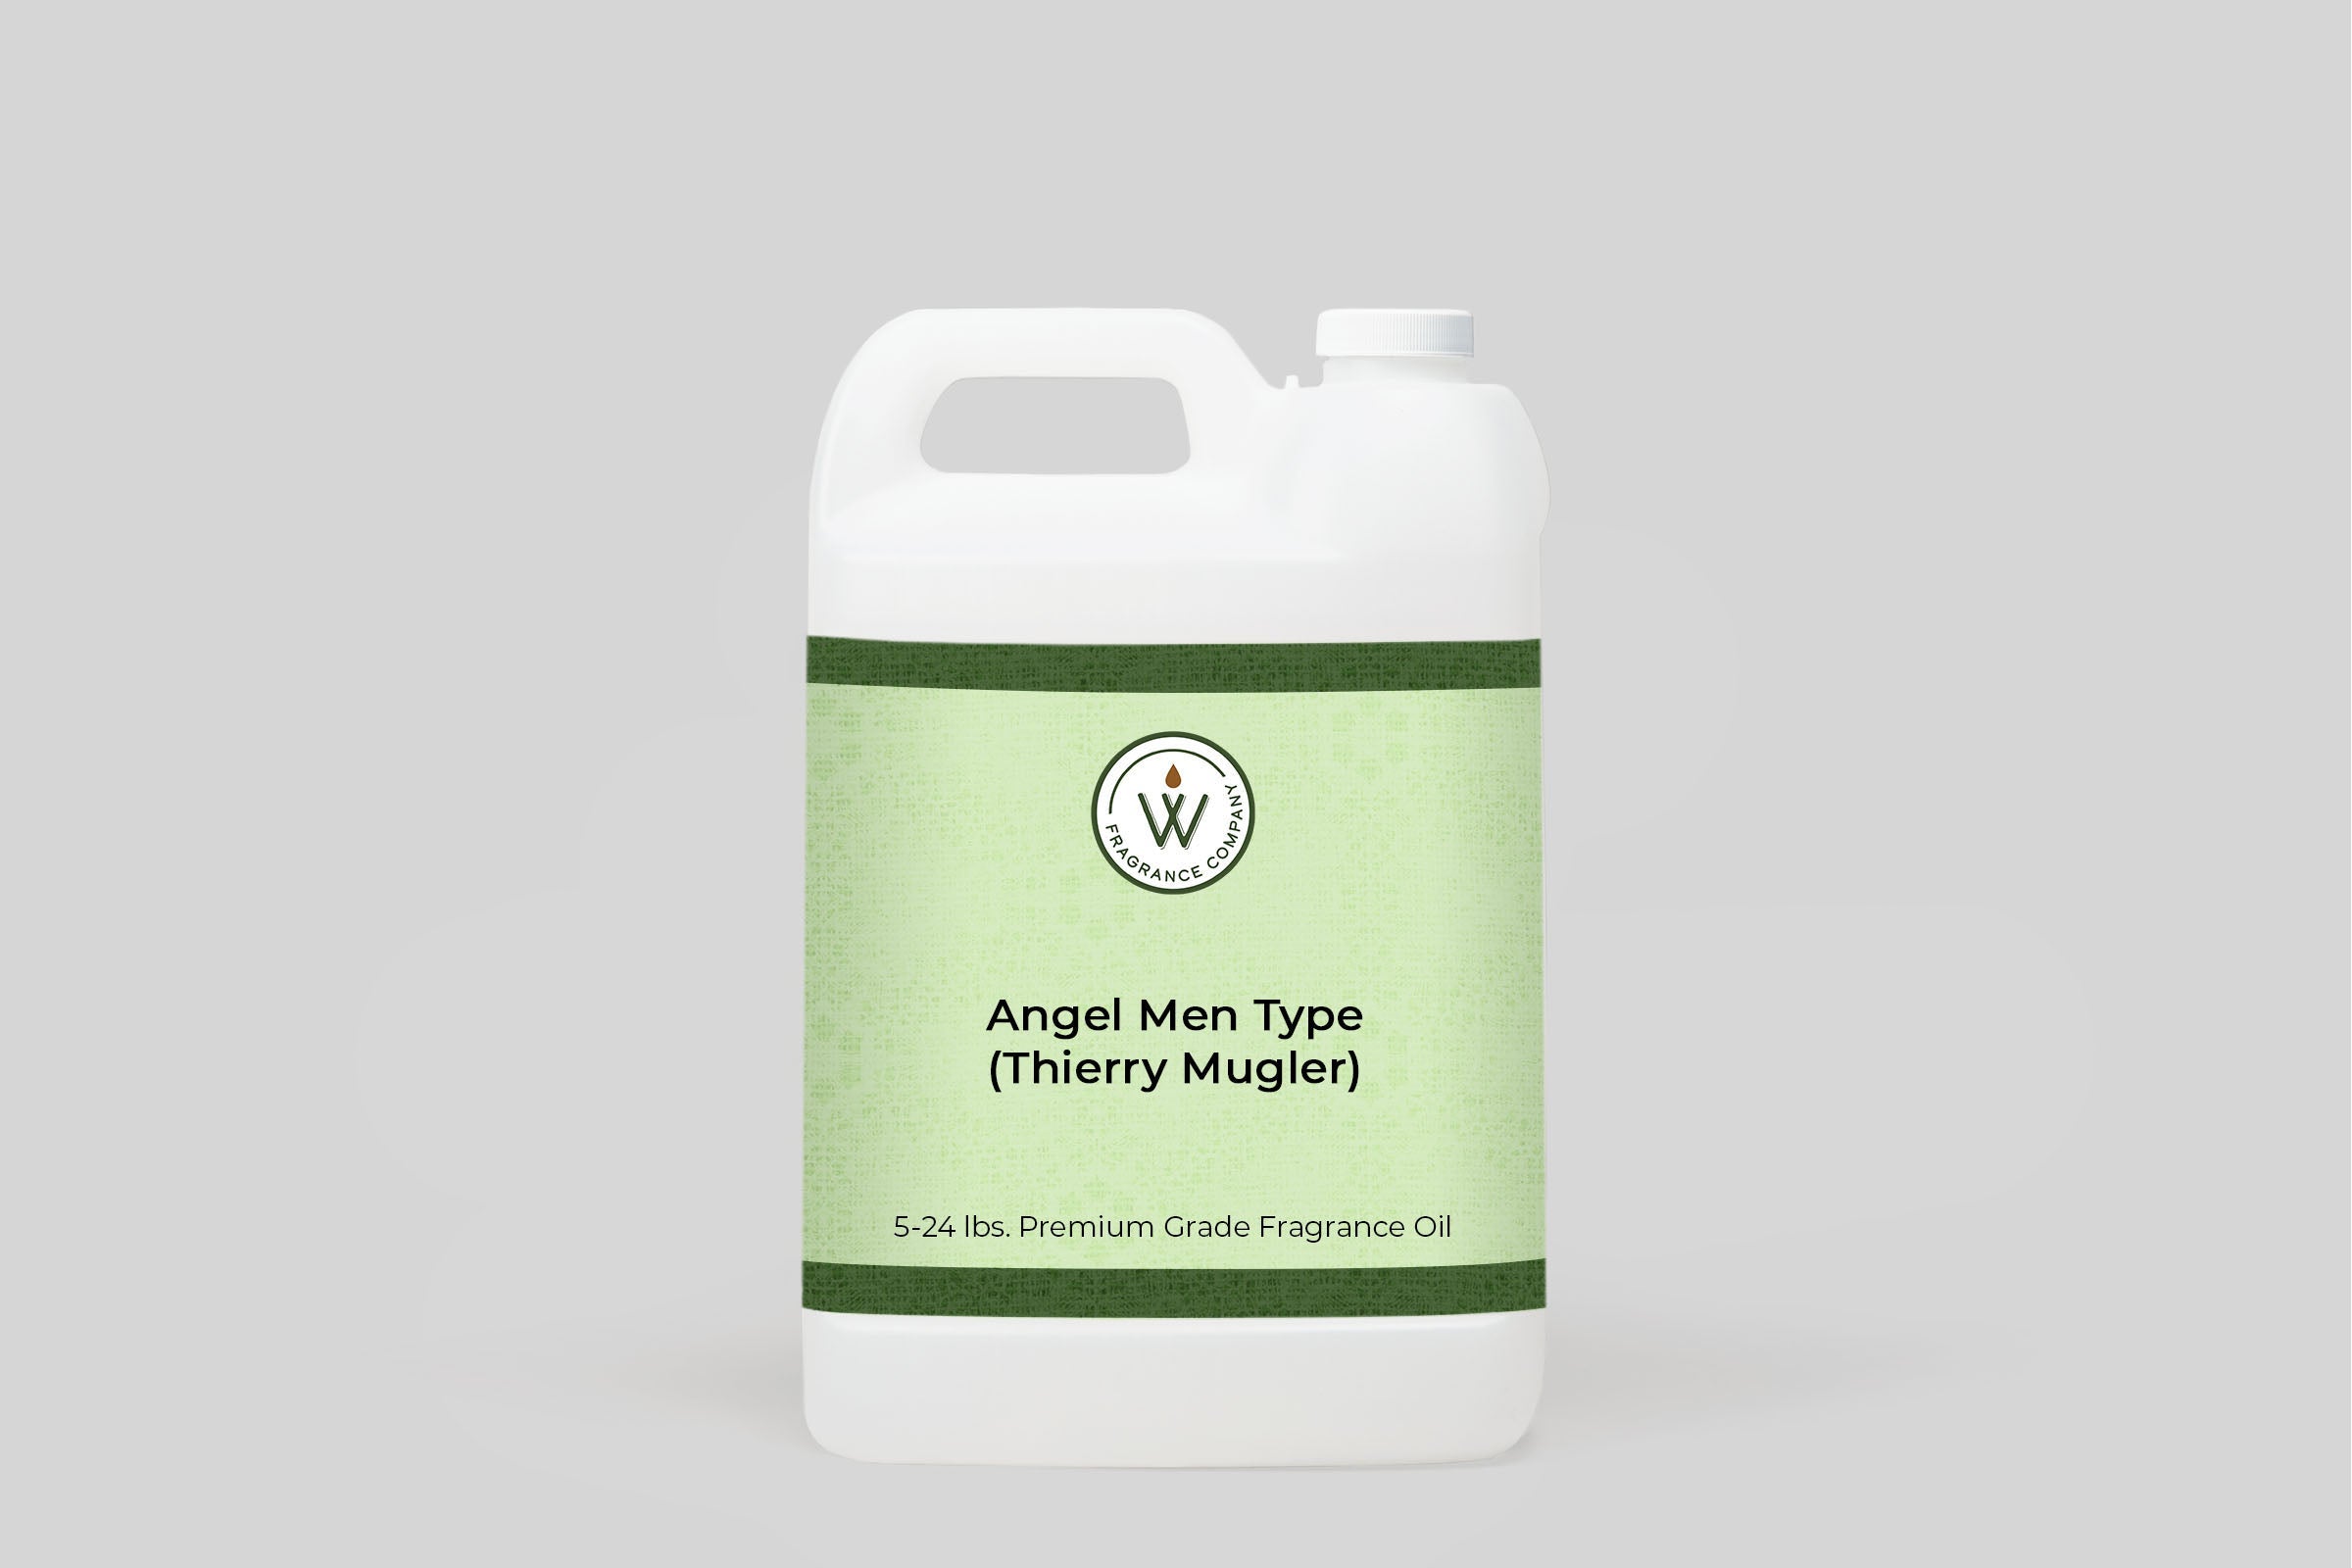 Angel Men Type (Thierry Mugler) Fragrance Oil